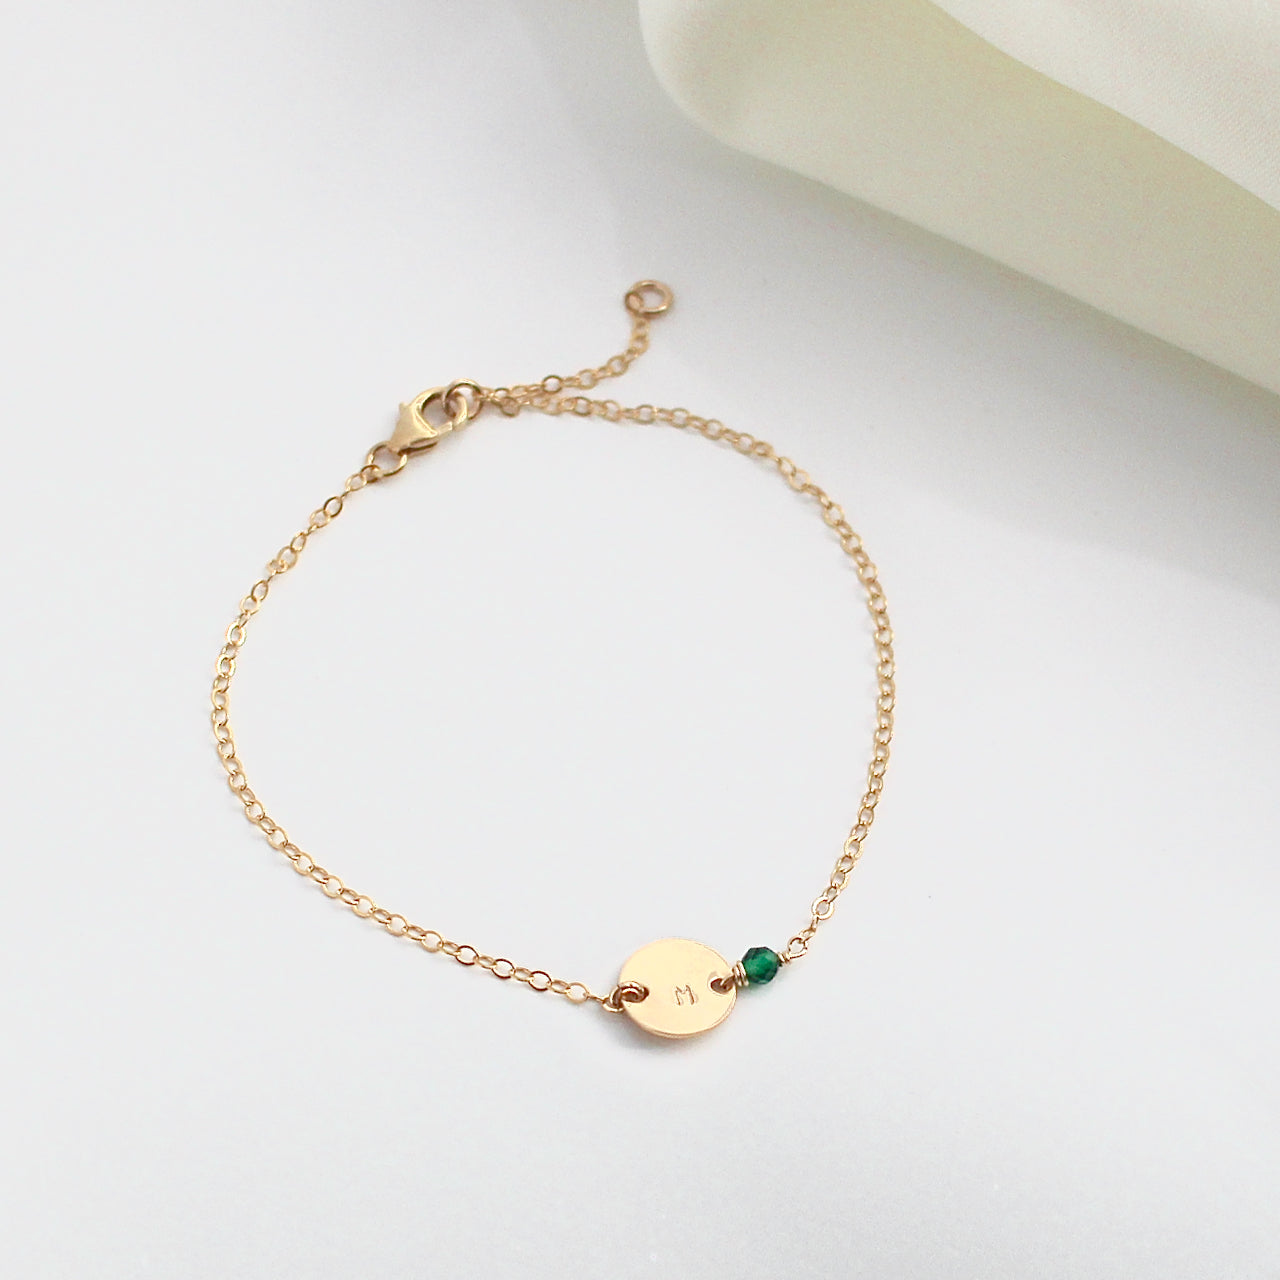 Personalised Gold Birthstone bracelet - May - Emerald